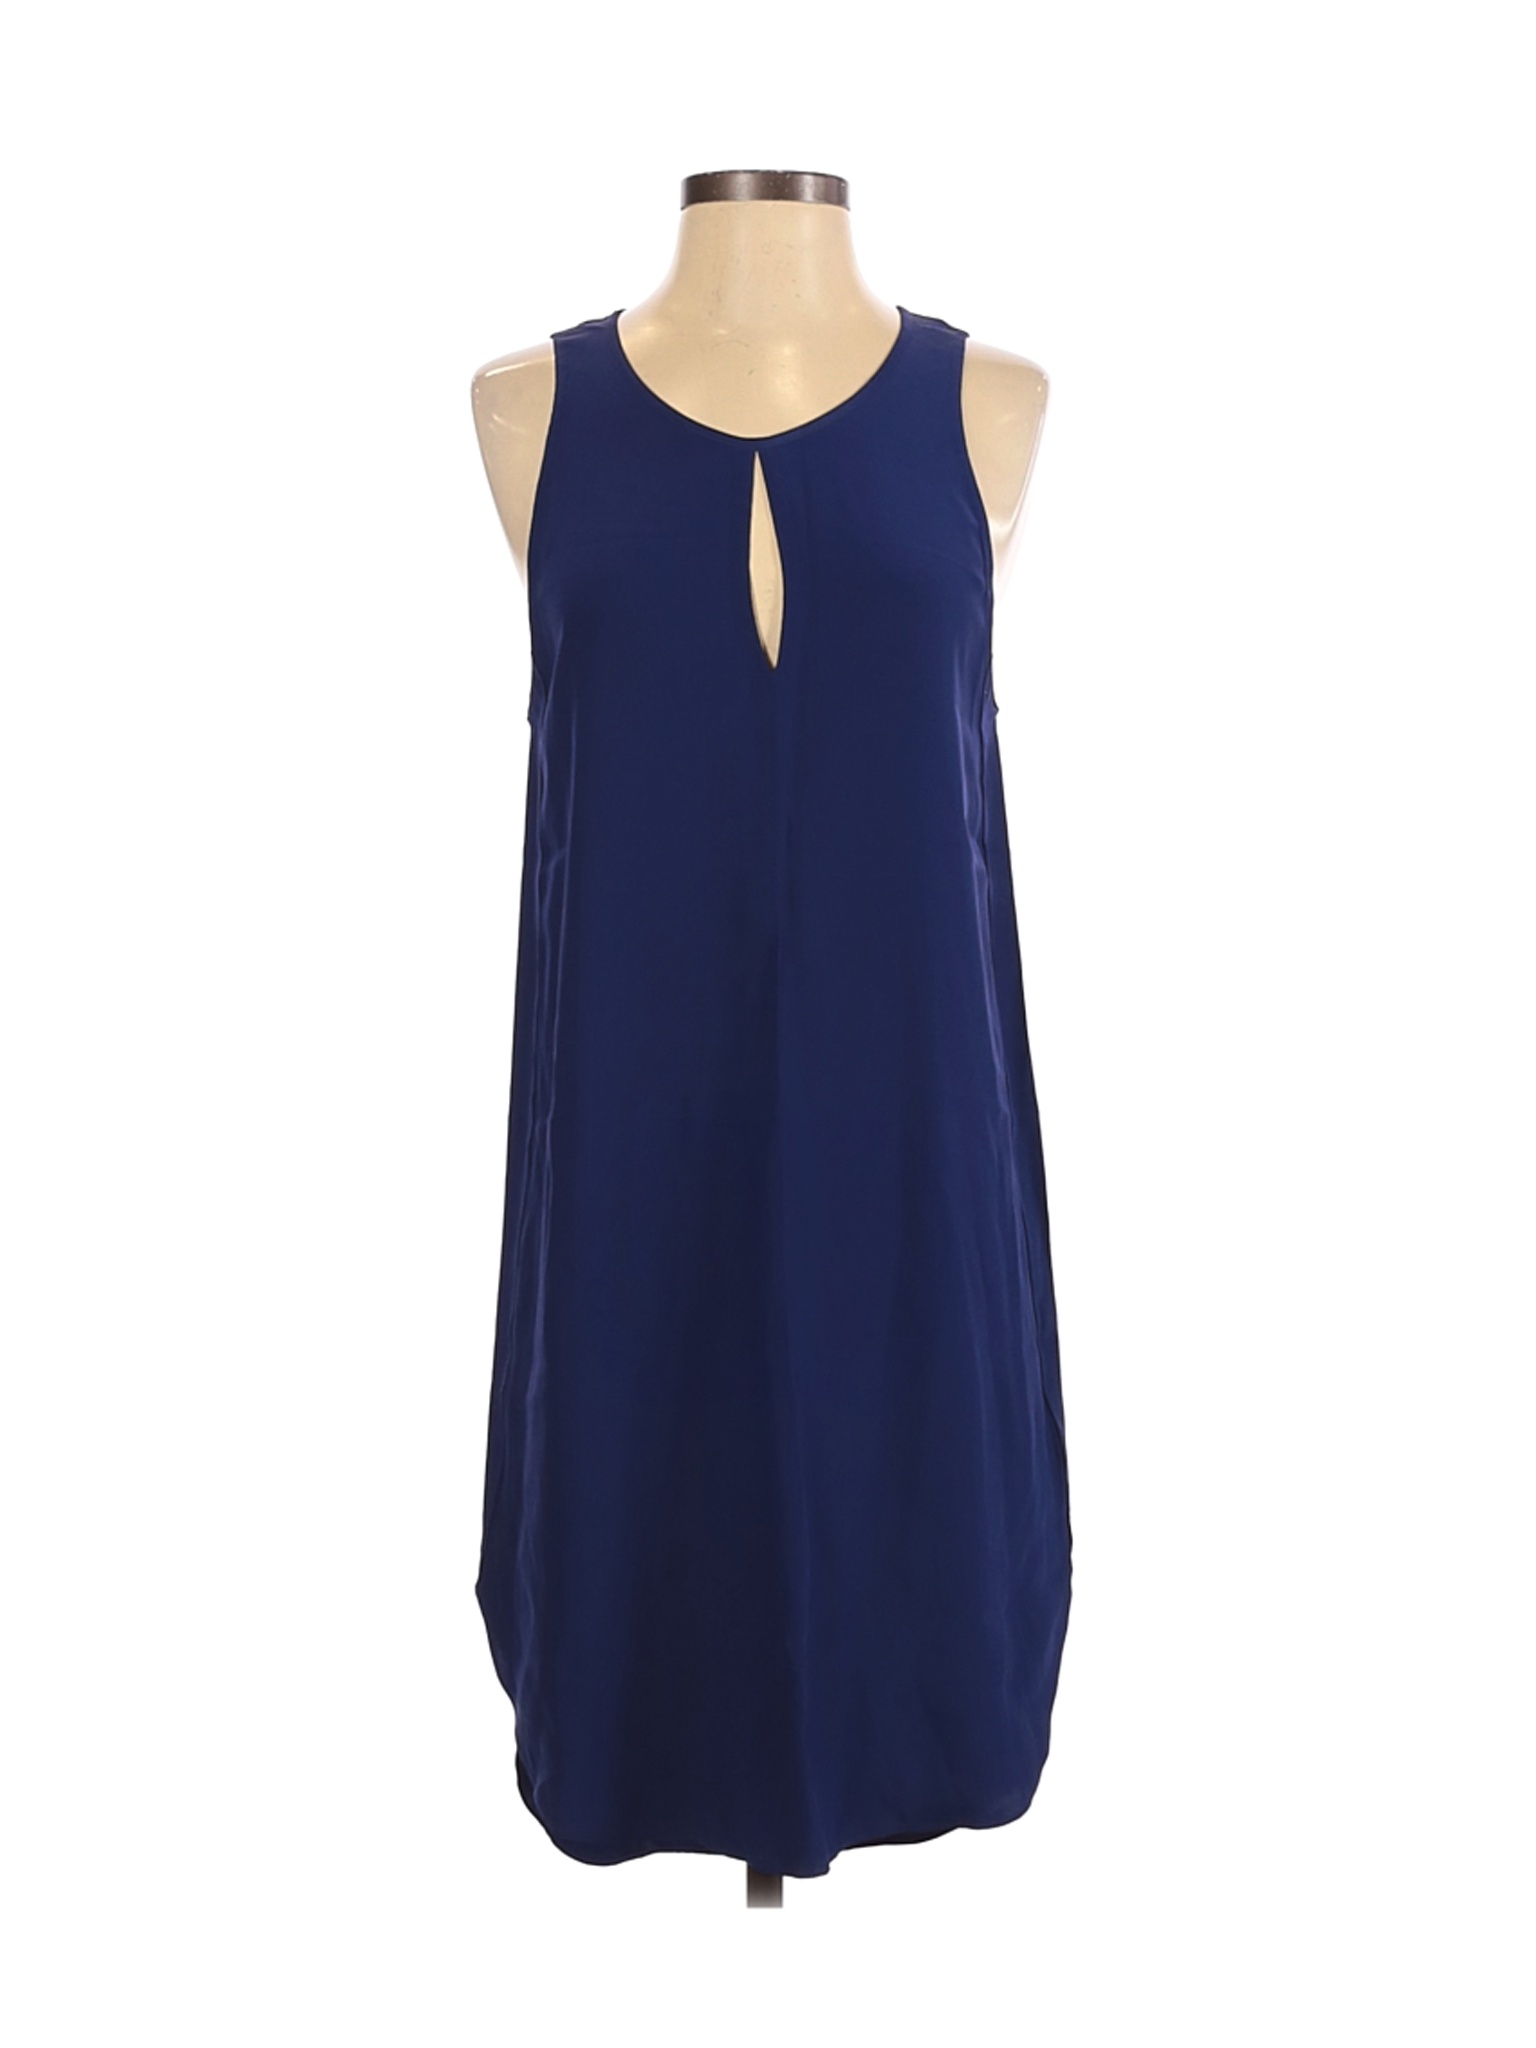 Wilfred Women Blue Cocktail Dress XS | eBay